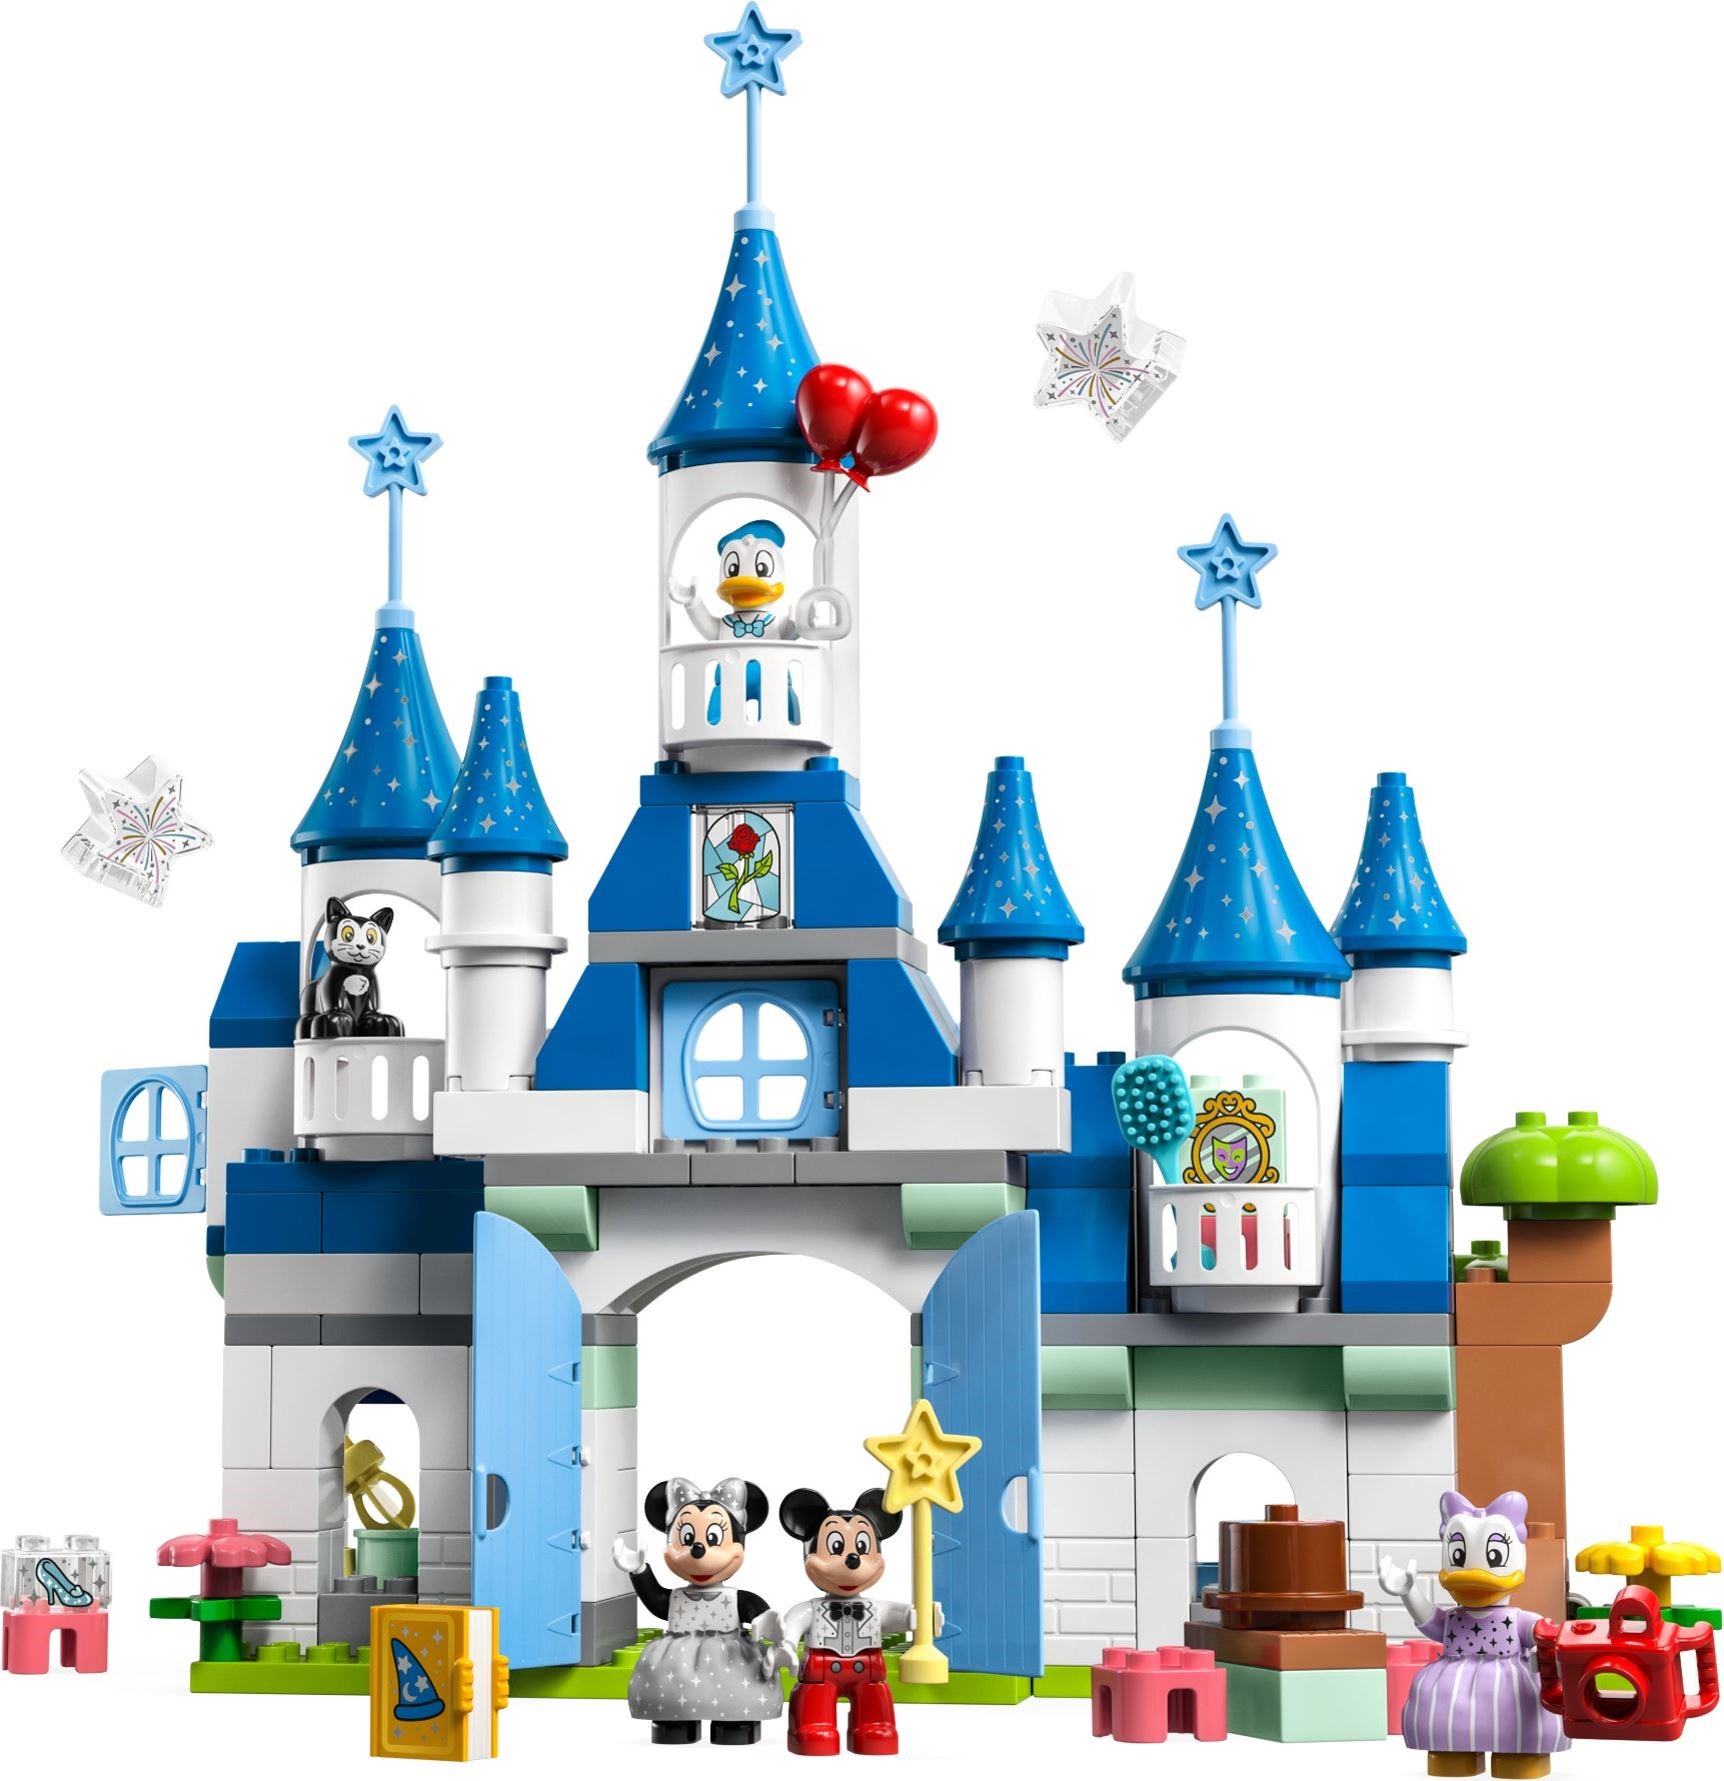 LEGO 43222 Disney Castle is an enchanting 4837-piece celebration